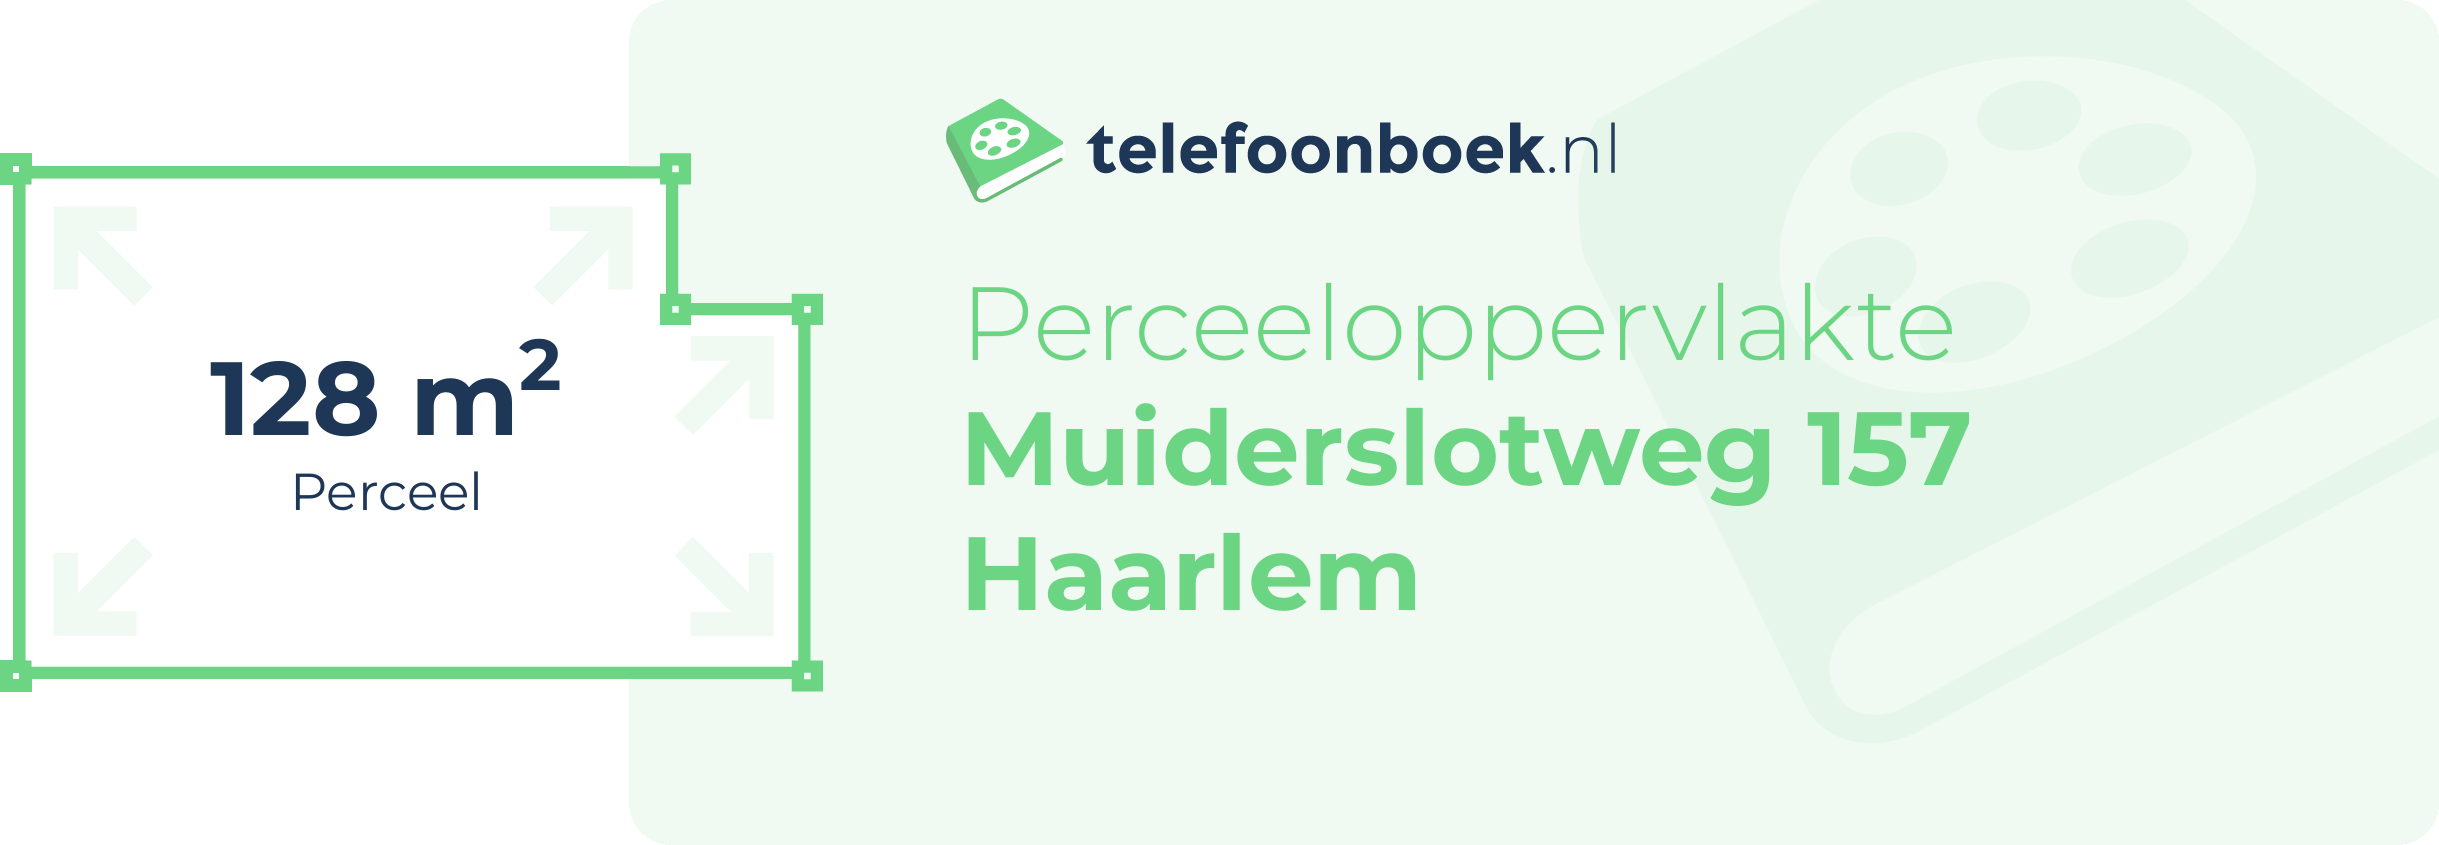 Perceeloppervlakte Muiderslotweg 157 Haarlem